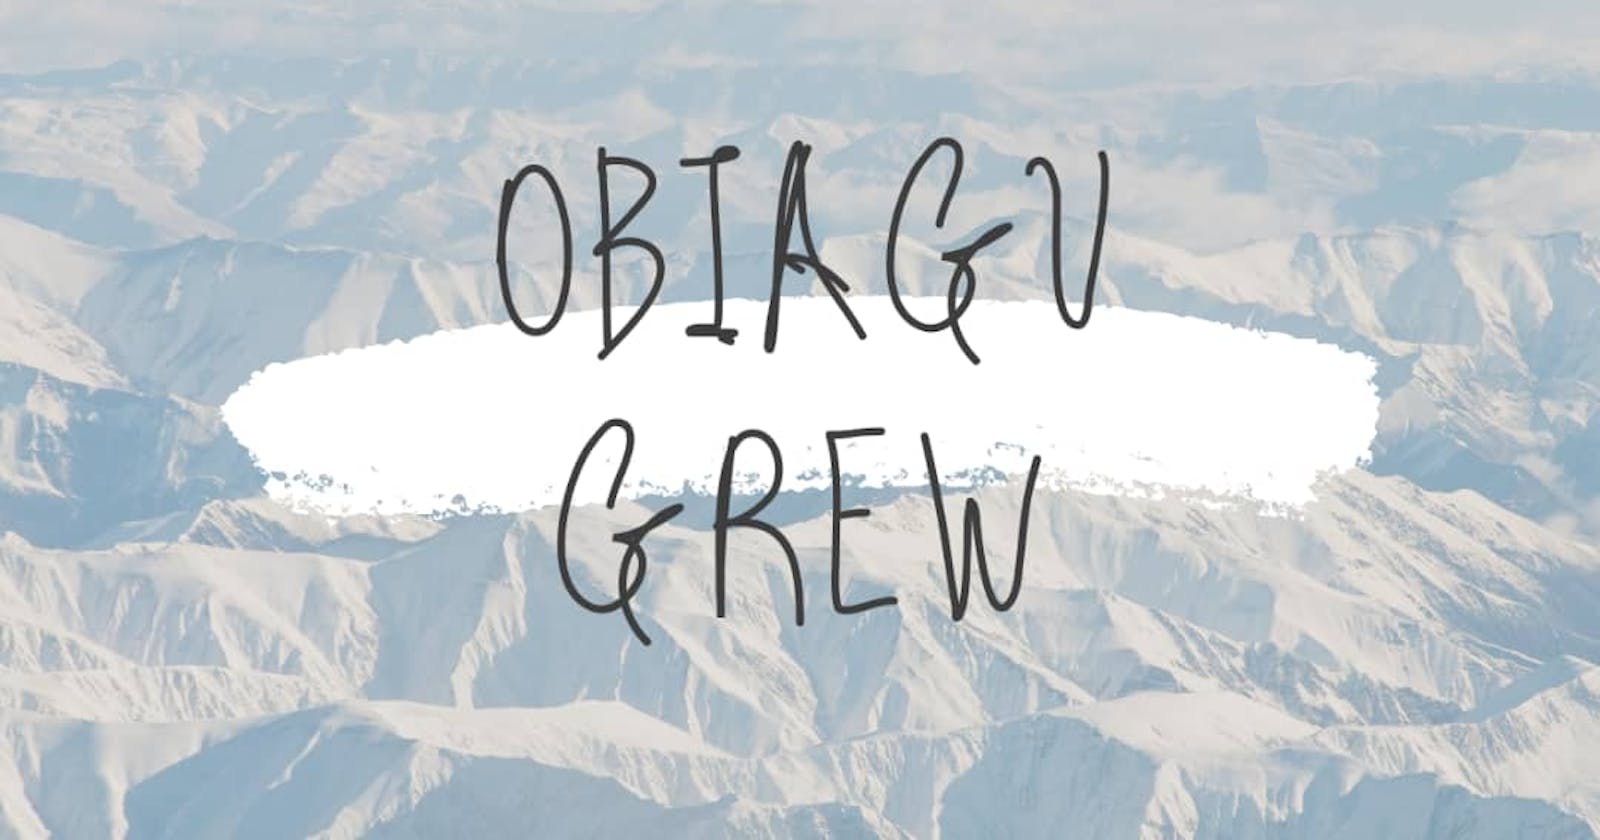 Obiagu grew